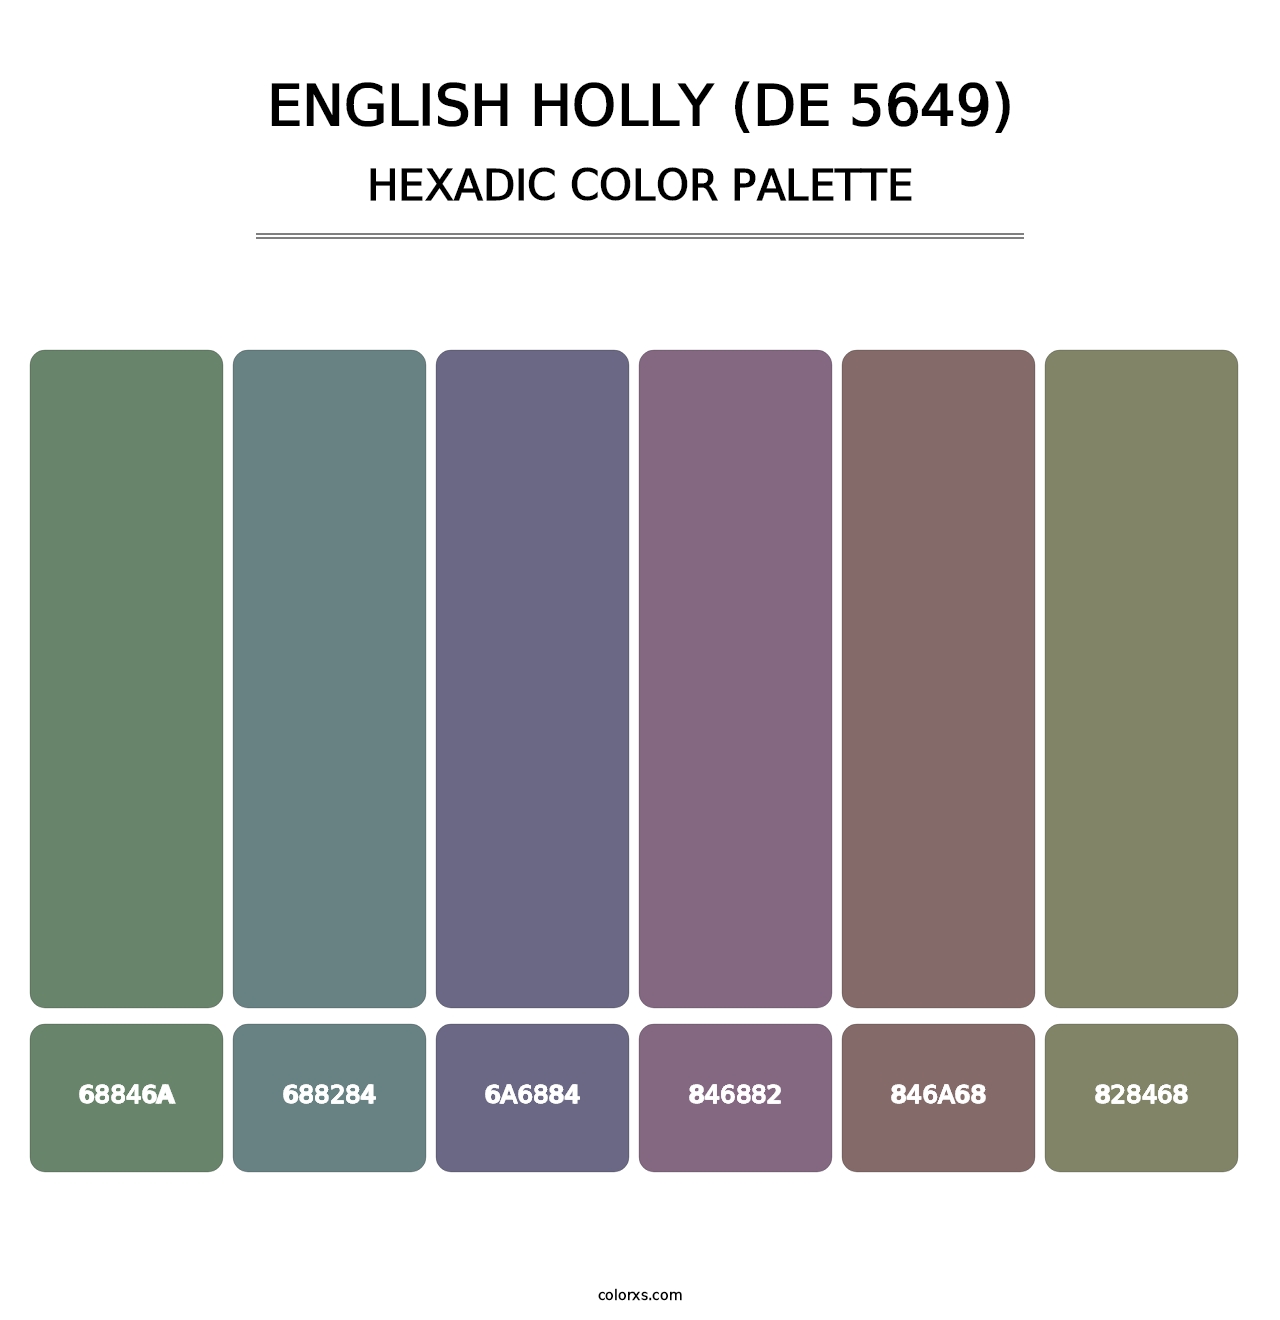 English Holly (DE 5649) - Hexadic Color Palette